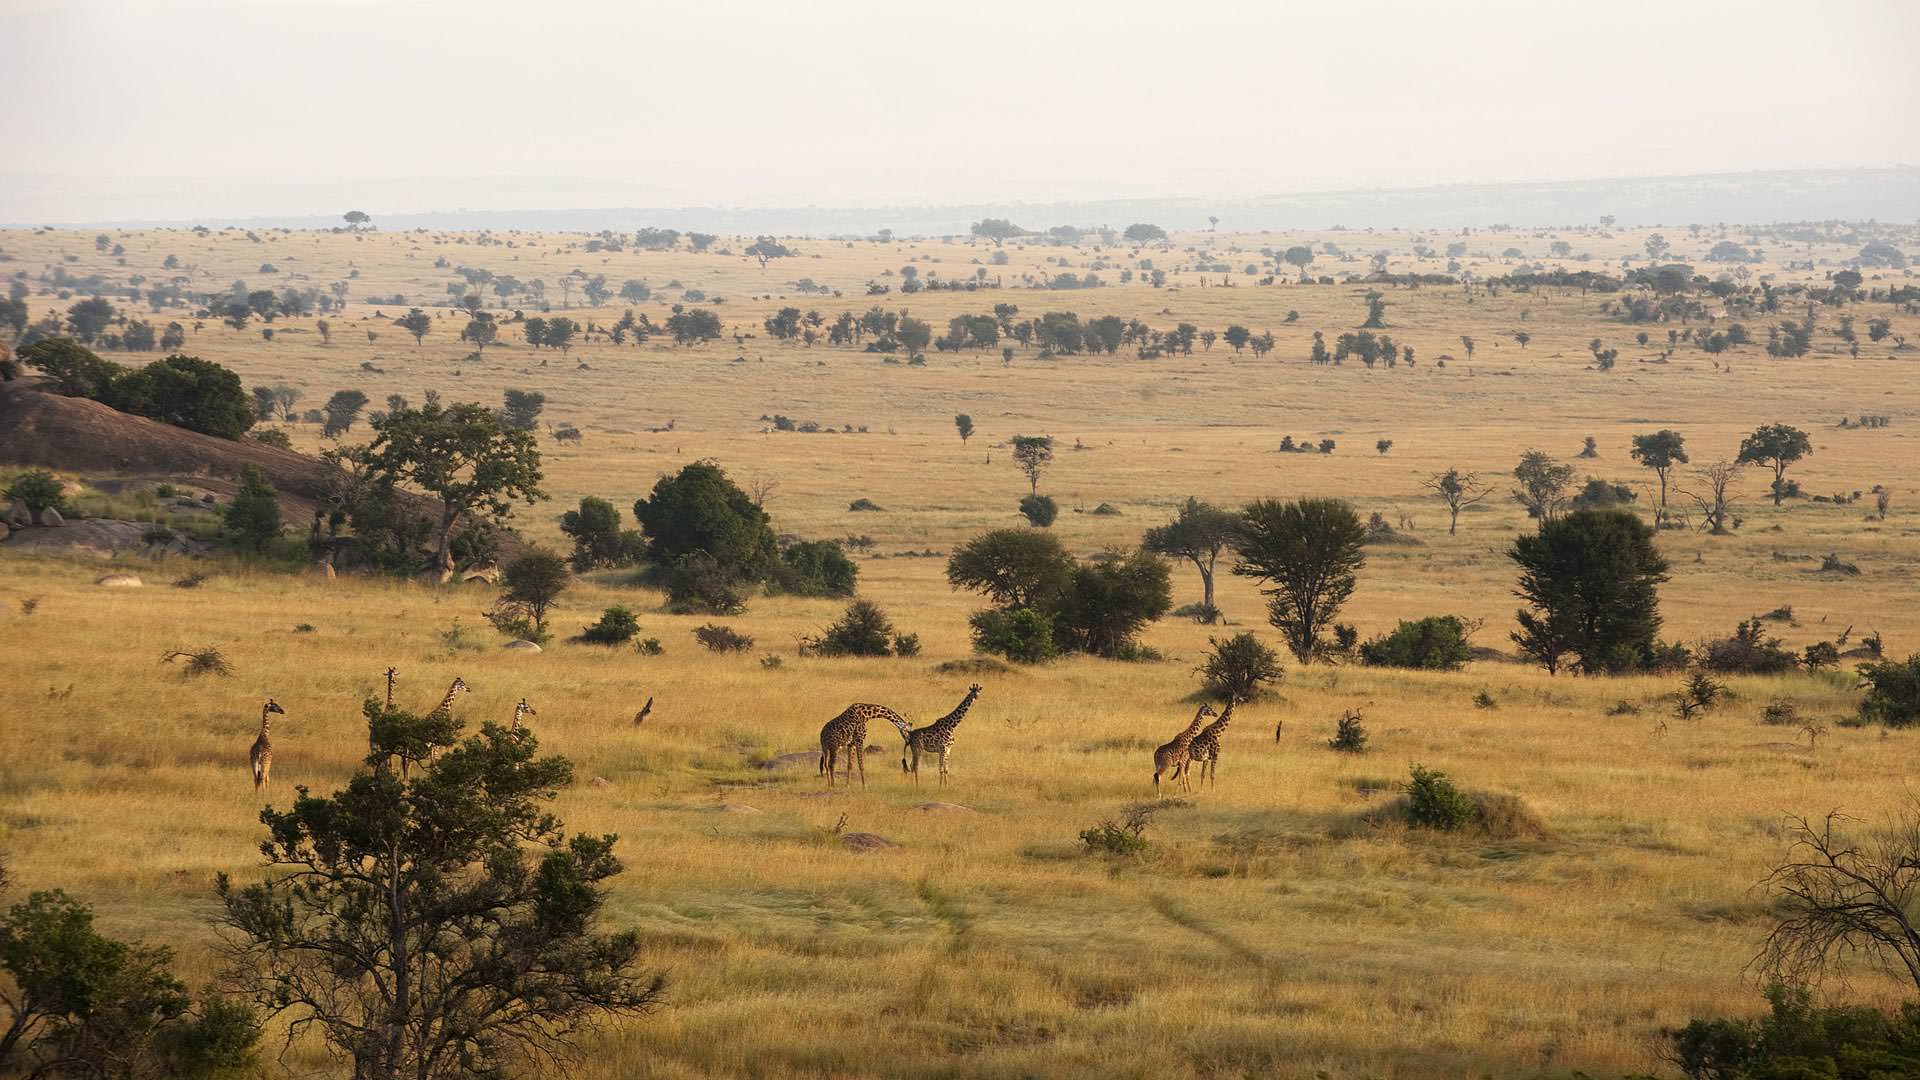 Giraffe on the Serengeti plains